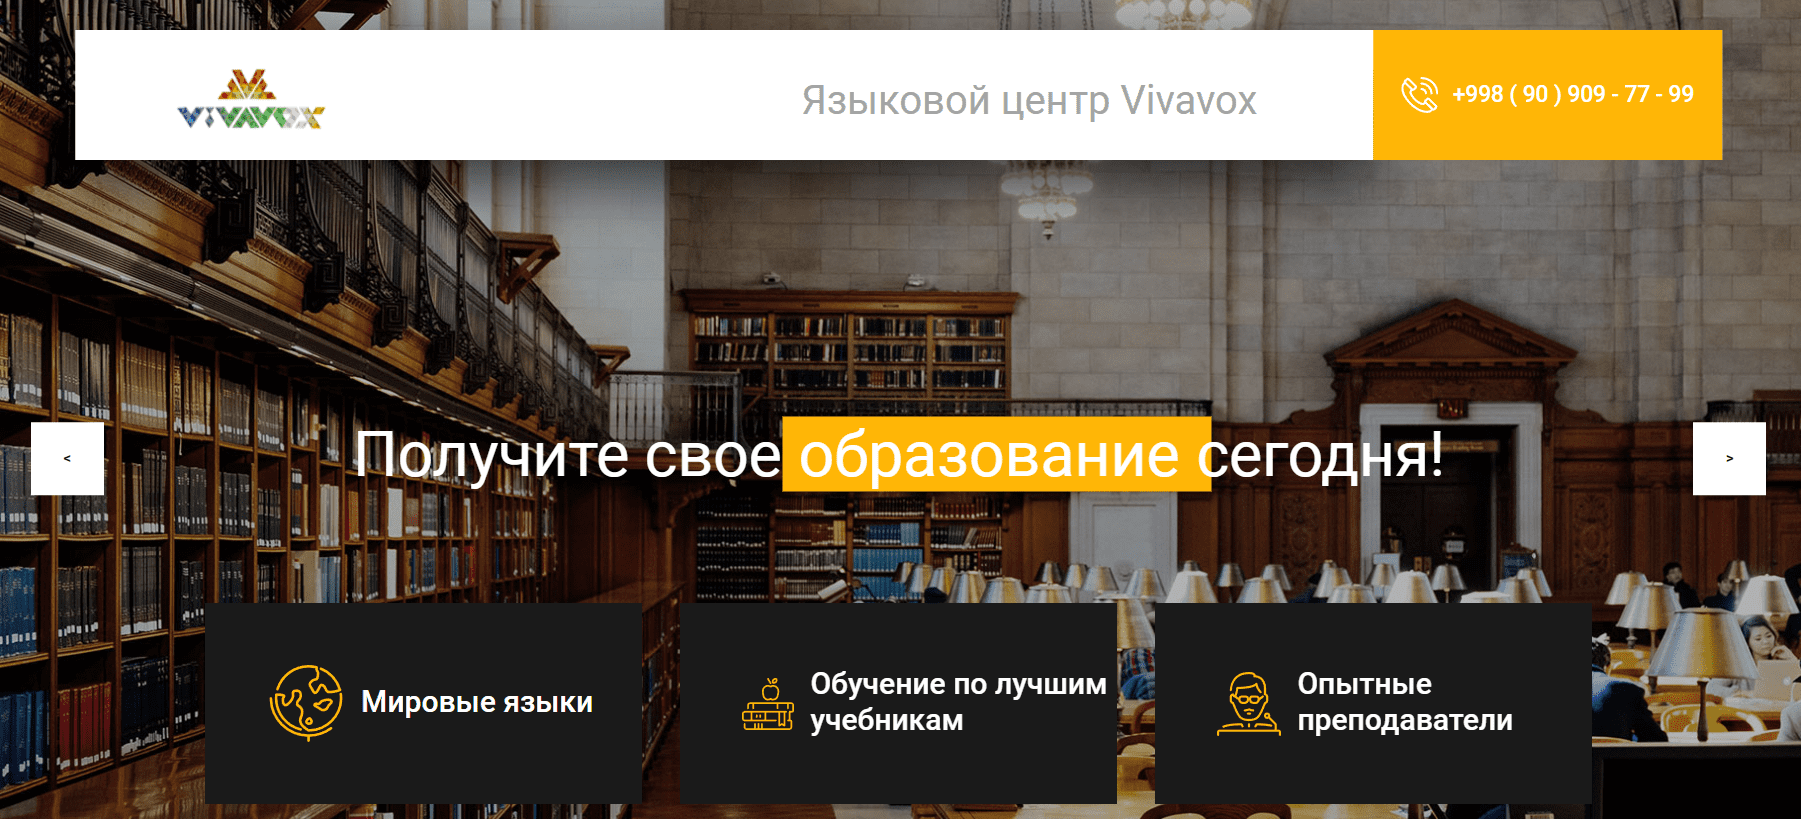 Vivavox.uz - официальный сайт